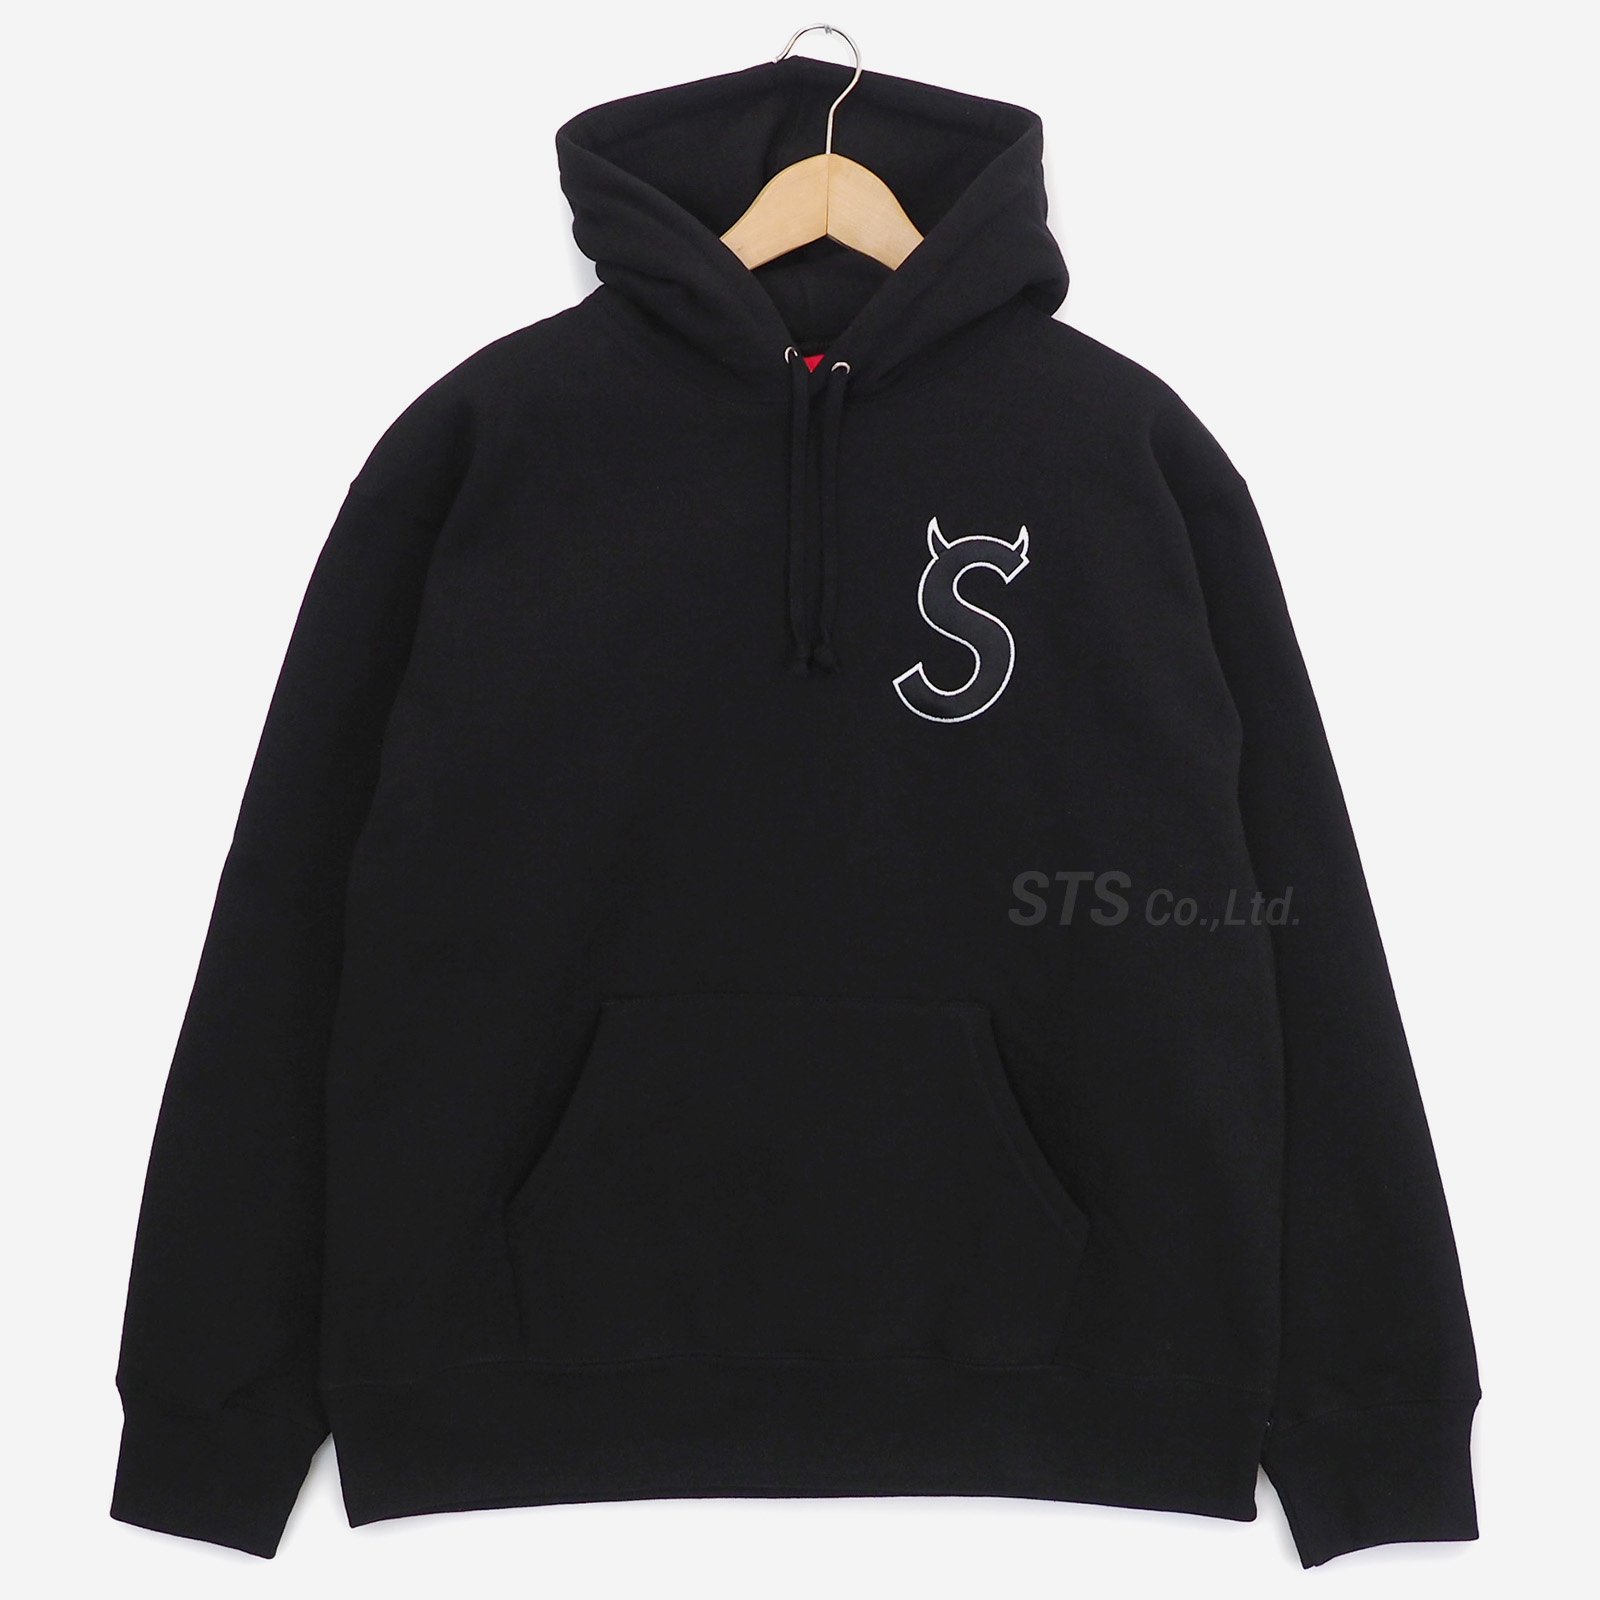 Supreme シュプリーム S Logo Hooded Sweatshirt AW 18 WEEK (Supreme/パーカー・フーディ)  39095657【BUYMA】 | Supreme シュプリーム Sロゴ パーカー | oxygencycles.in